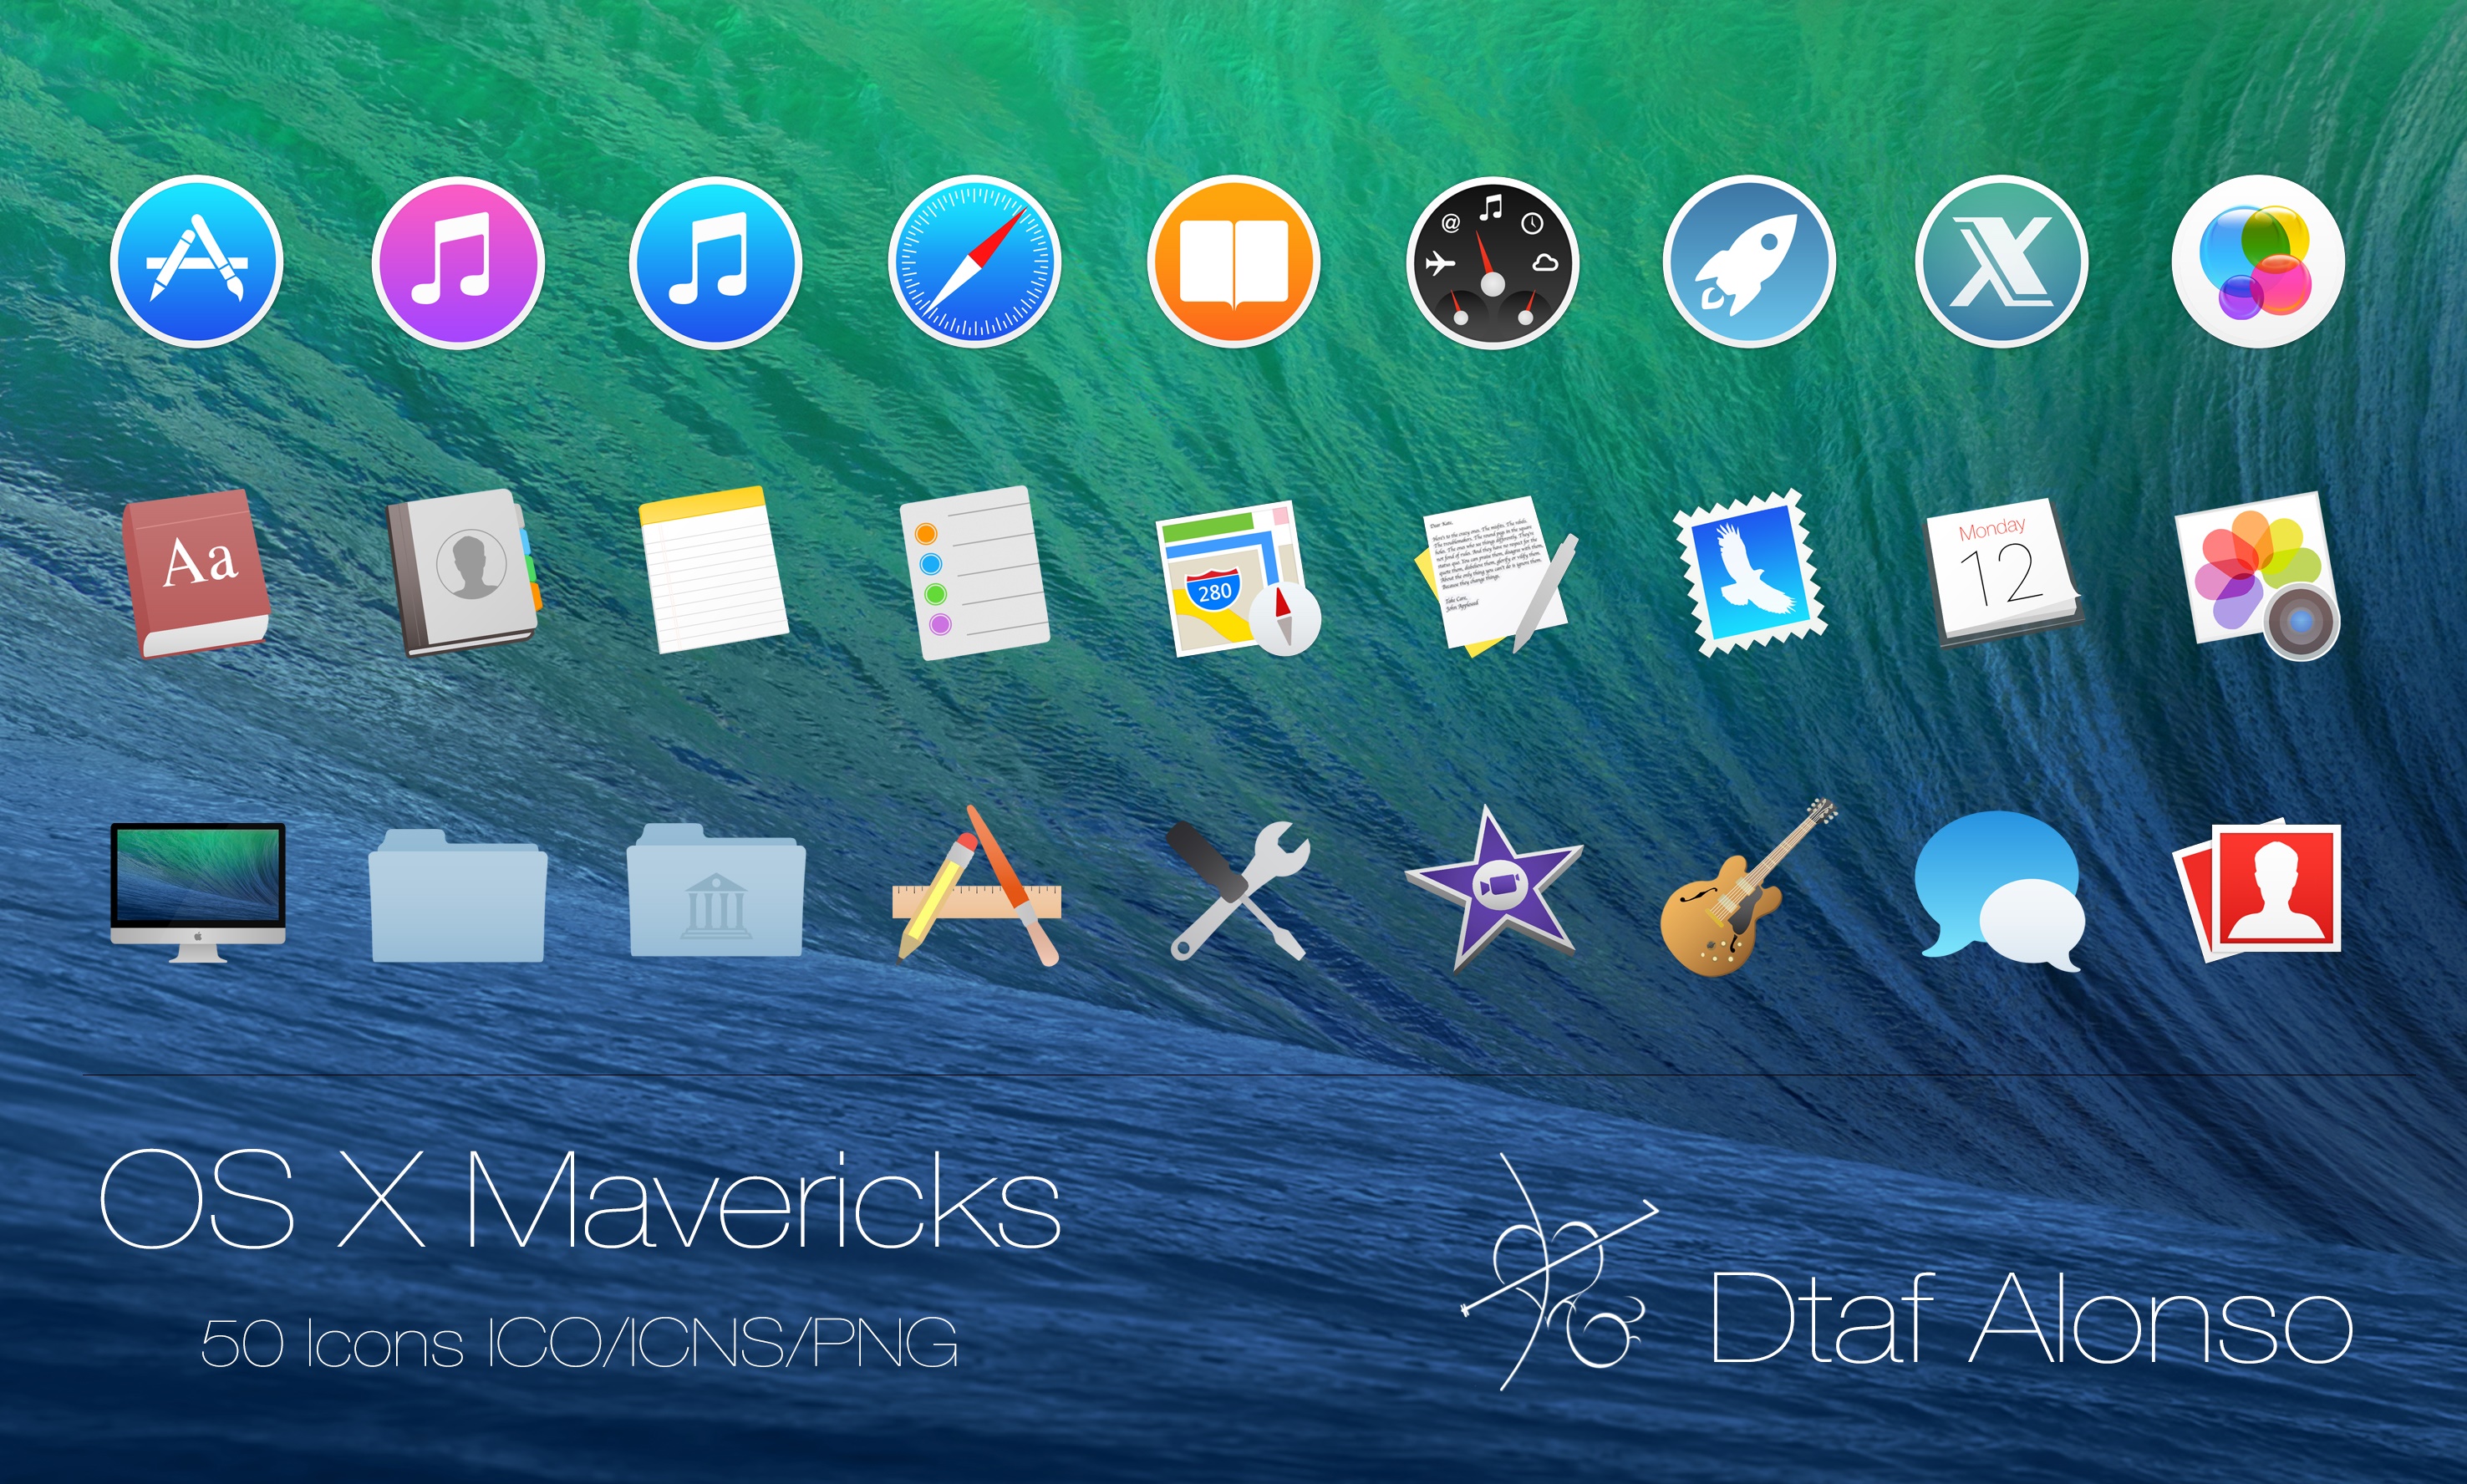 OS X Mavericks icons